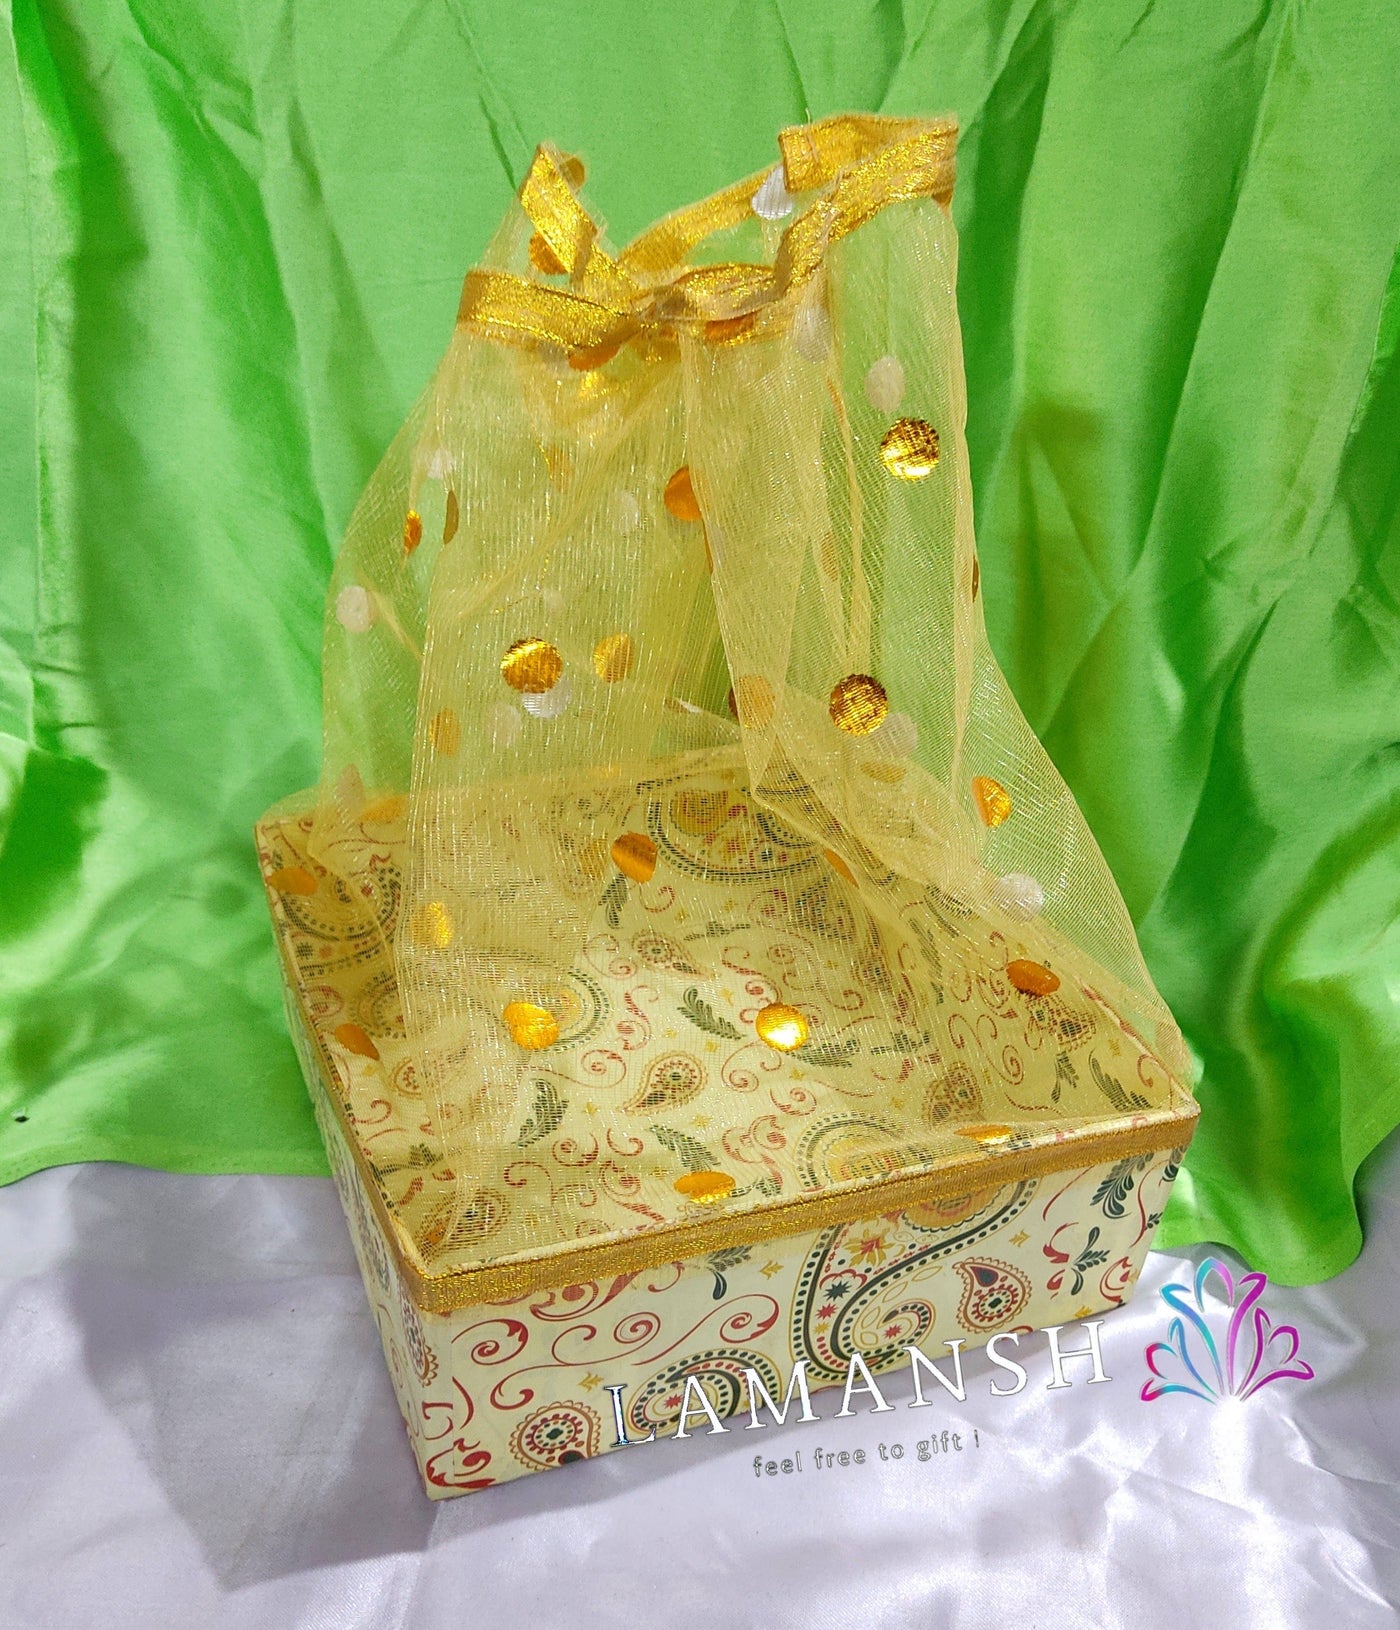 LAMANSH Multicolor / Cardboard / 8×8×3 inch LAMANSH® (8*8*3 inch) Pack of 10 Decorative Gifts Hampers, Fancy Storage Basket for Wedding /Packing/Fruit/Dry fruit/Multipurpose Baskets